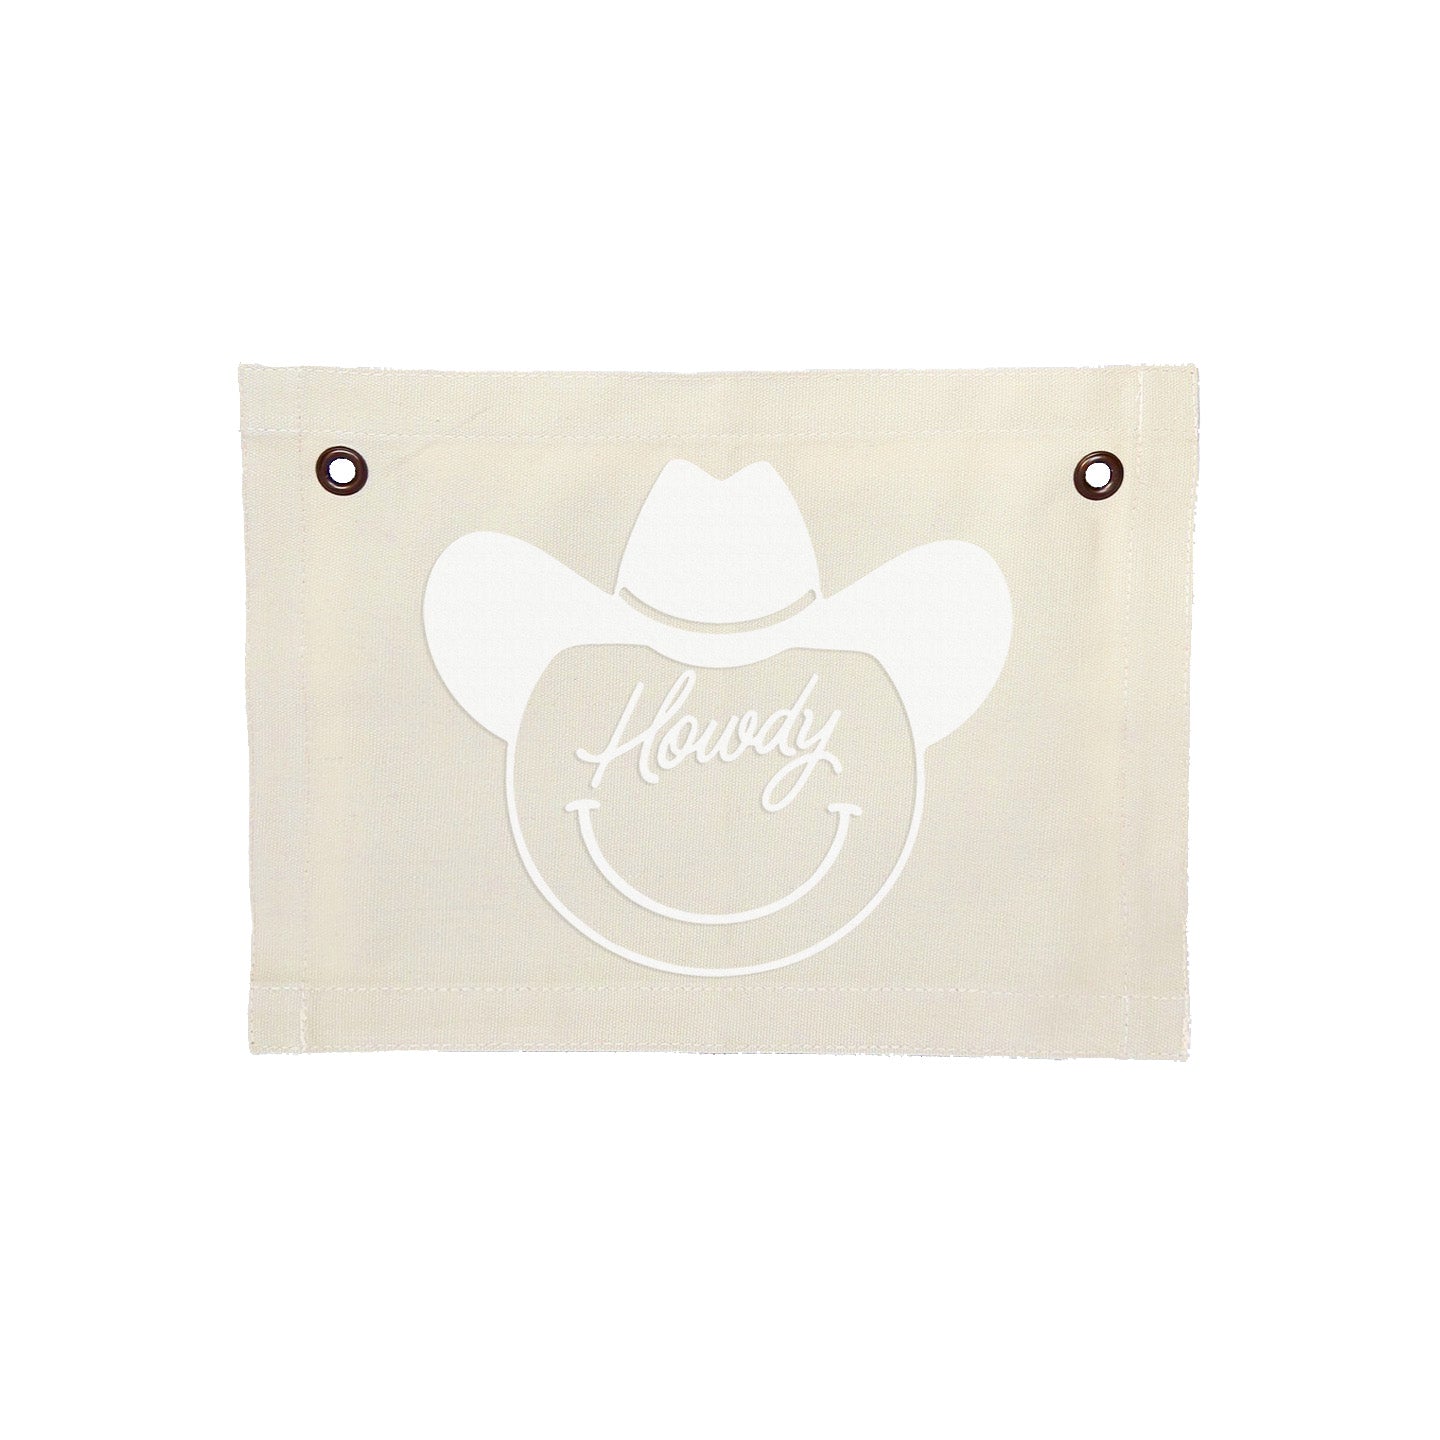 Howdy Cowboy Small Canvas Flag